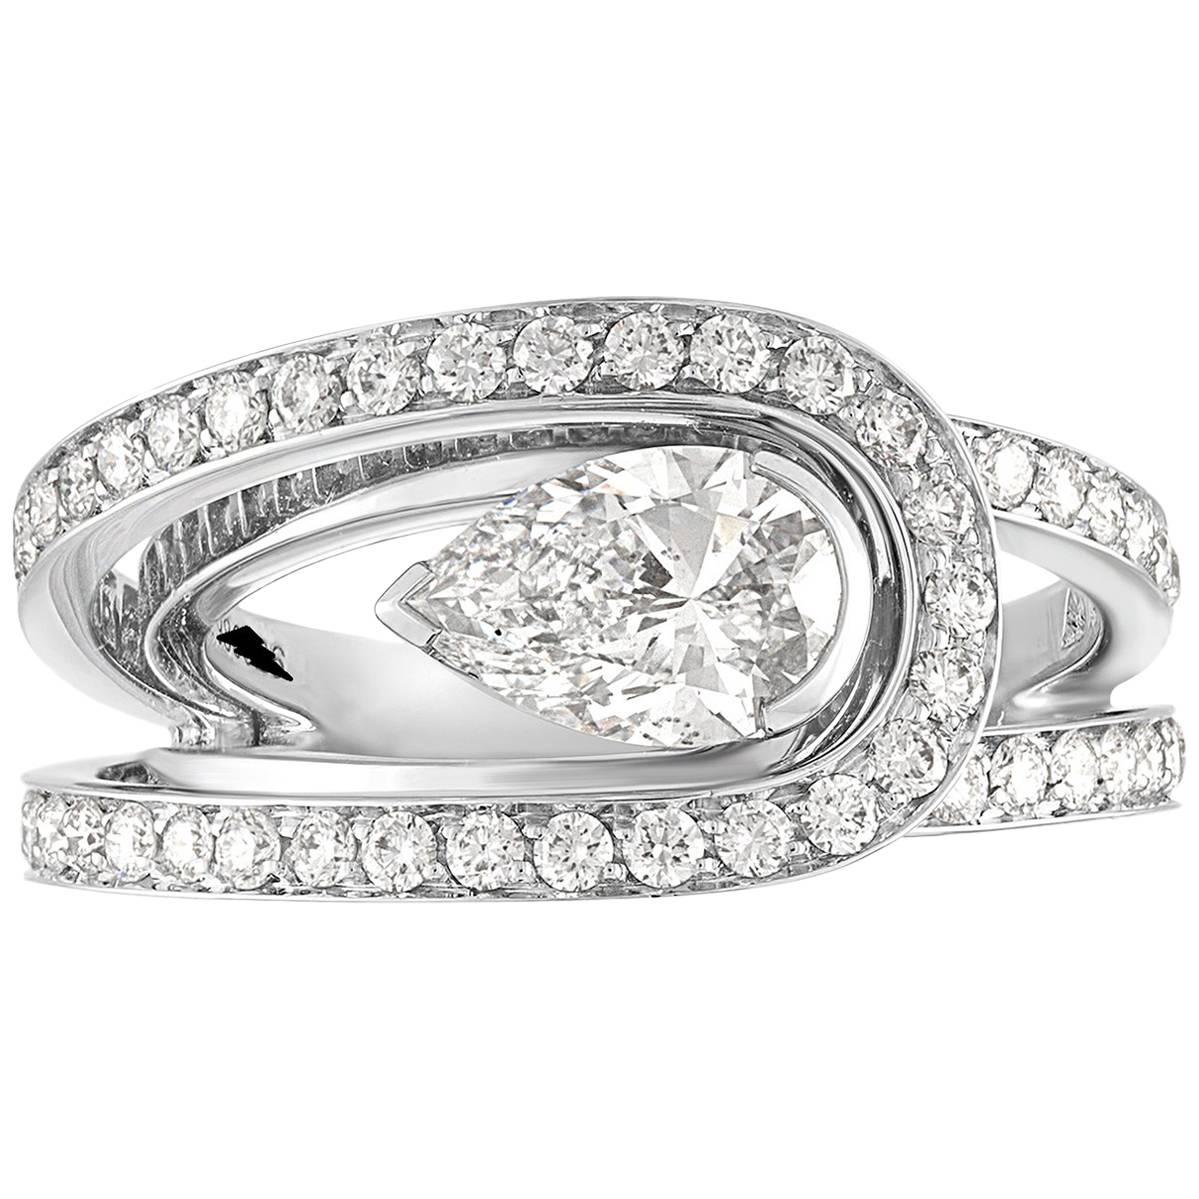 Fred of Paris GIA Certified 1.01 Carat E VVS1 Diamond Platinum Lovelight Ring